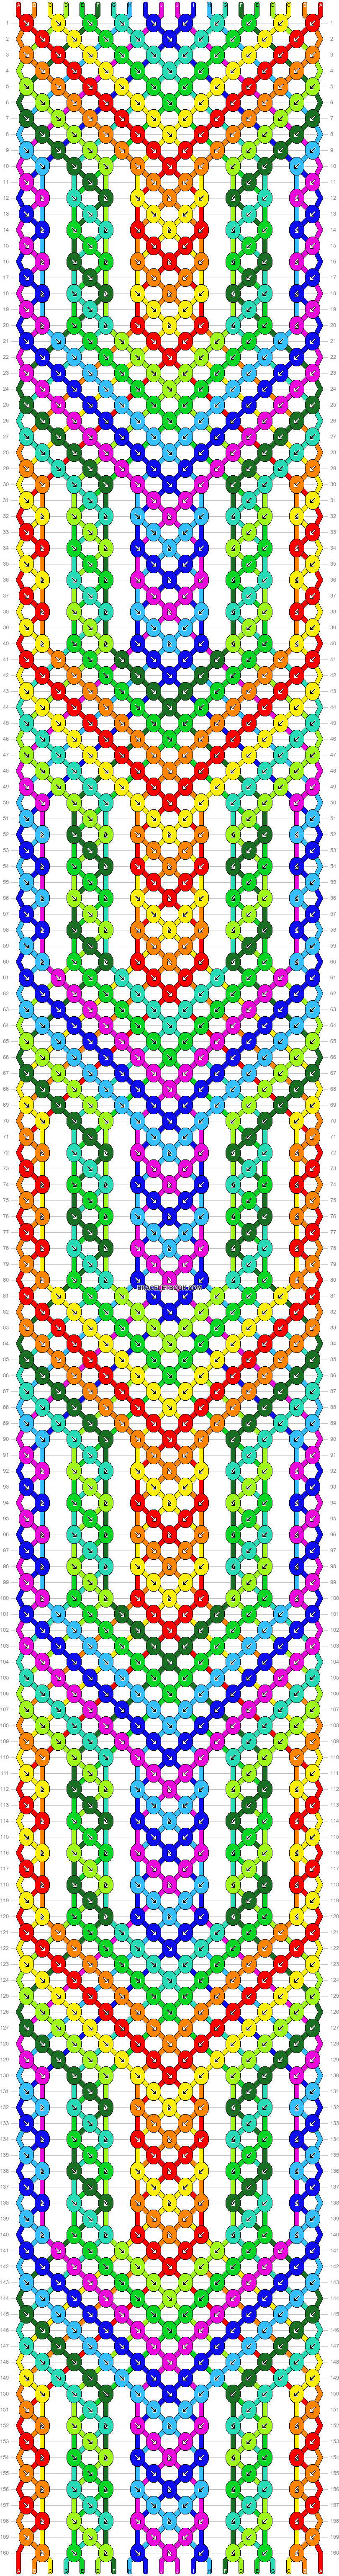 Normal pattern #51701 | BraceletBook